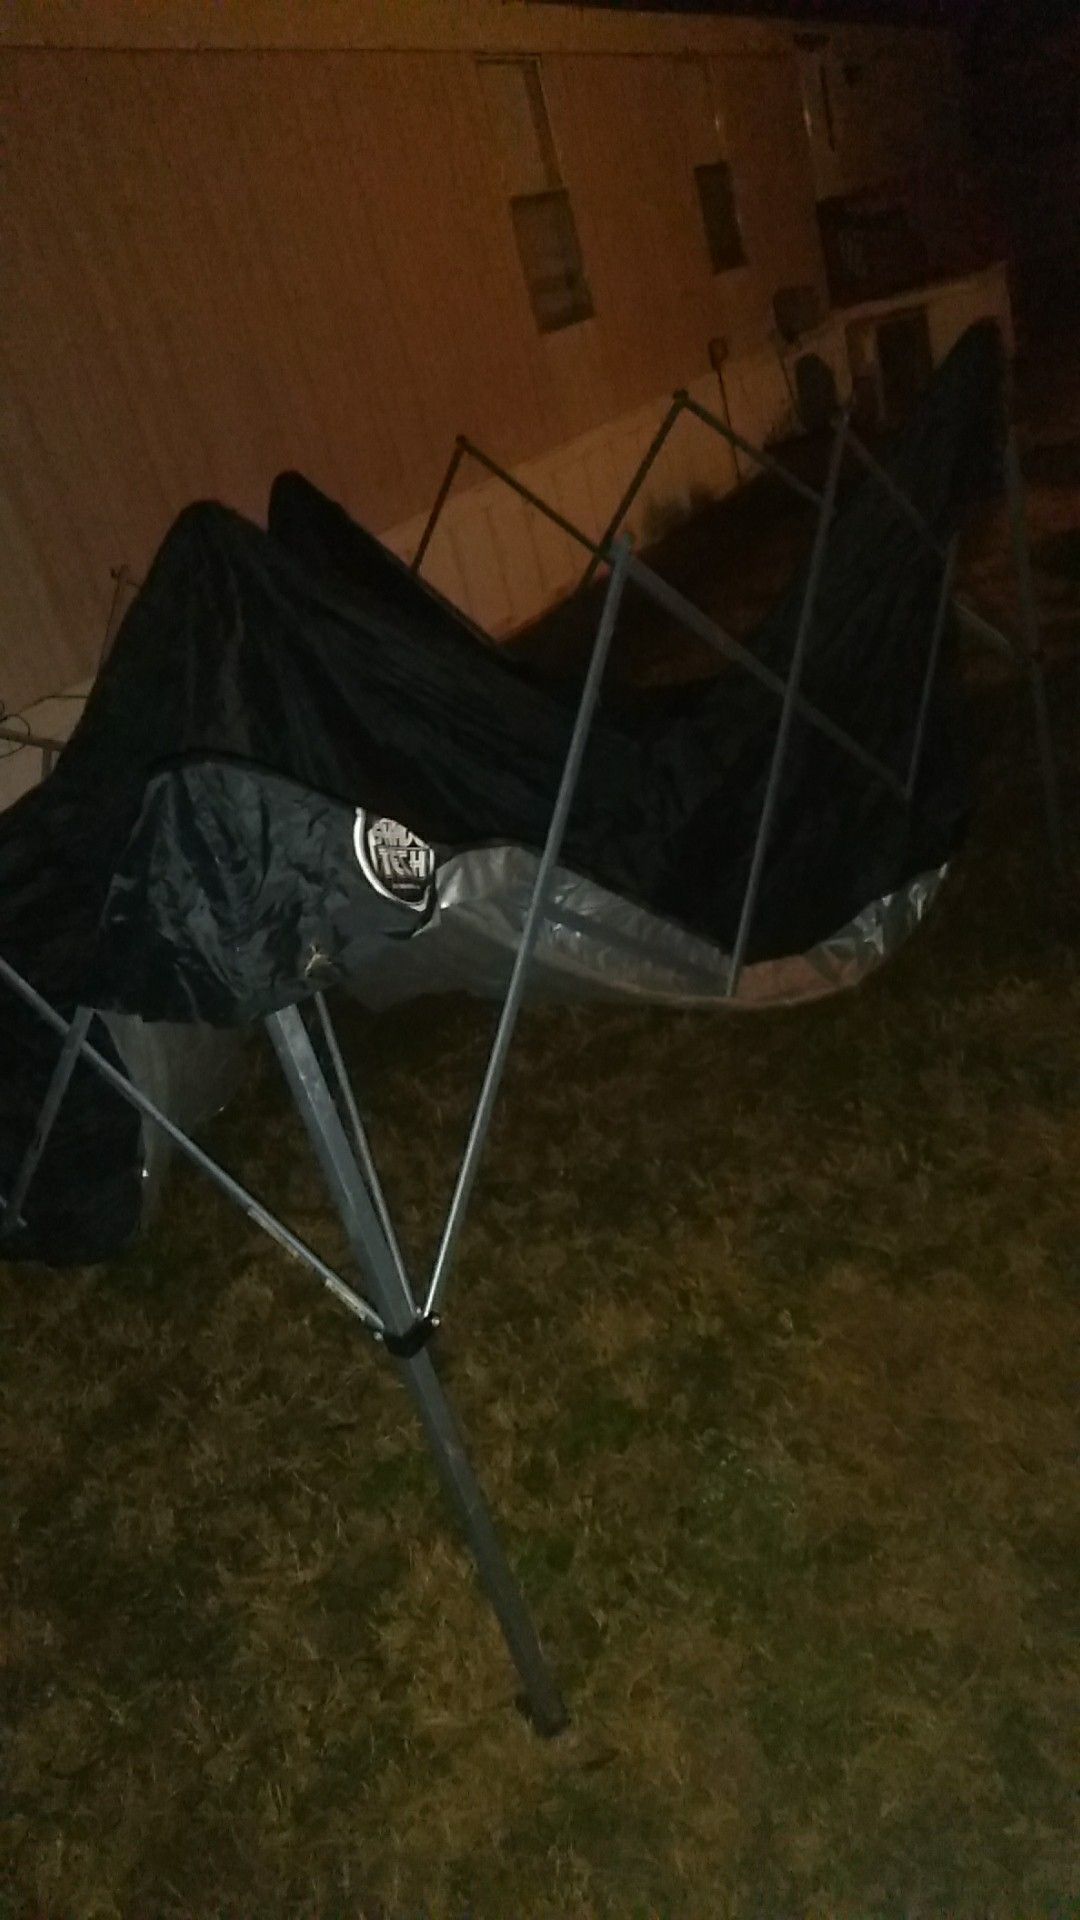 Ed pop up Shade tent